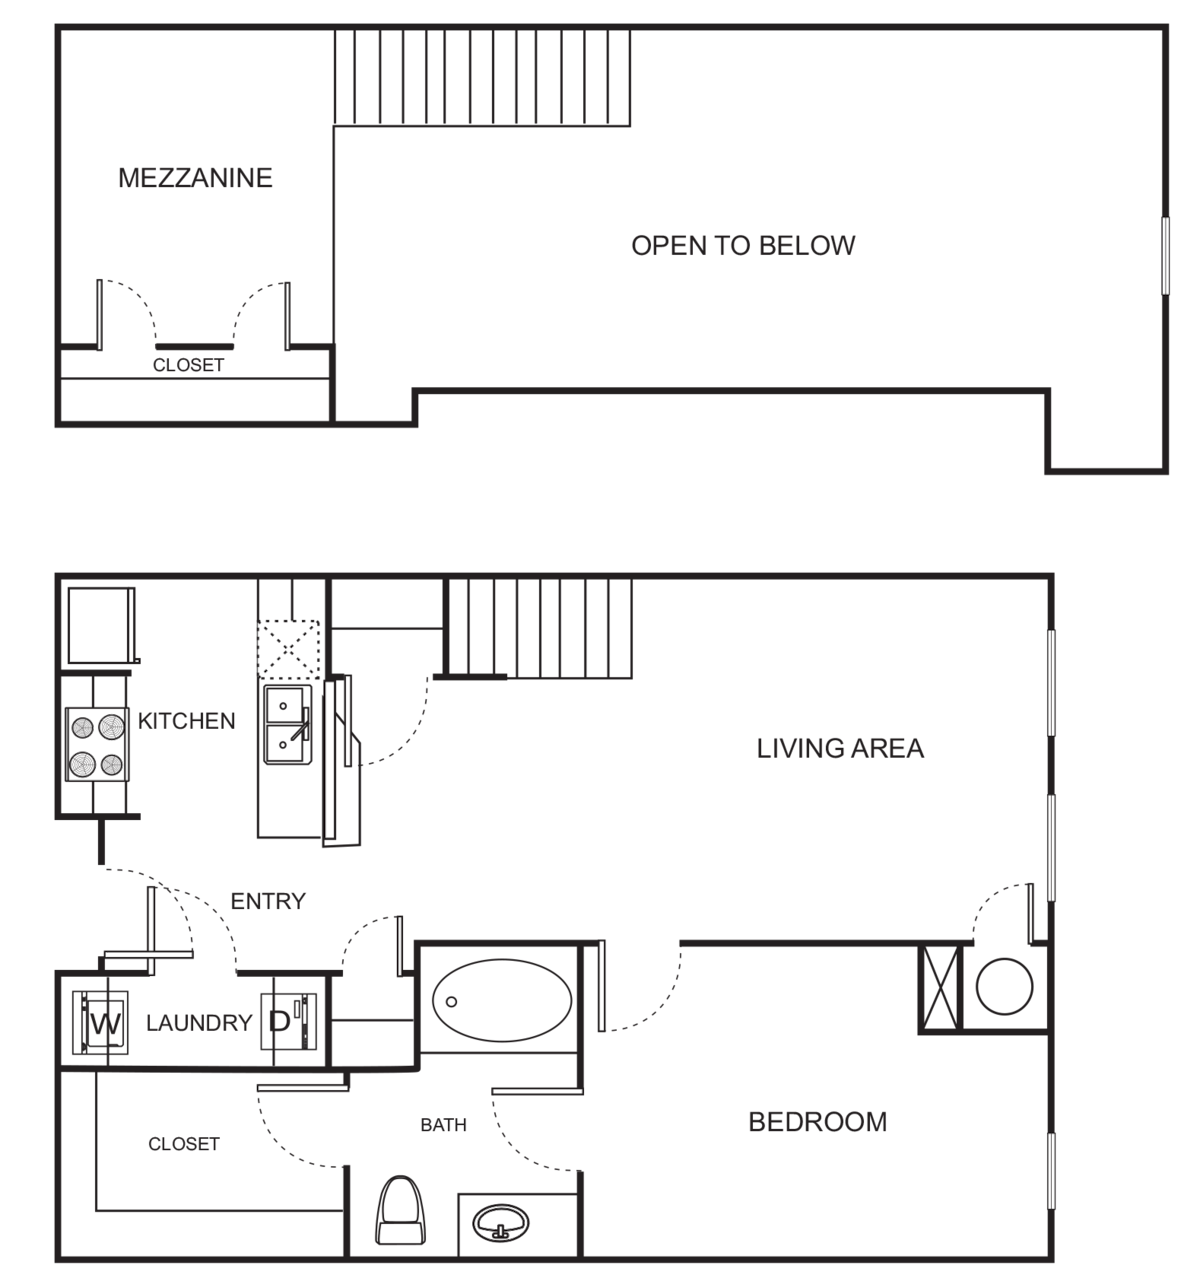 Floorplan diagram for A0-E One Bedroom Loft, showing Studio